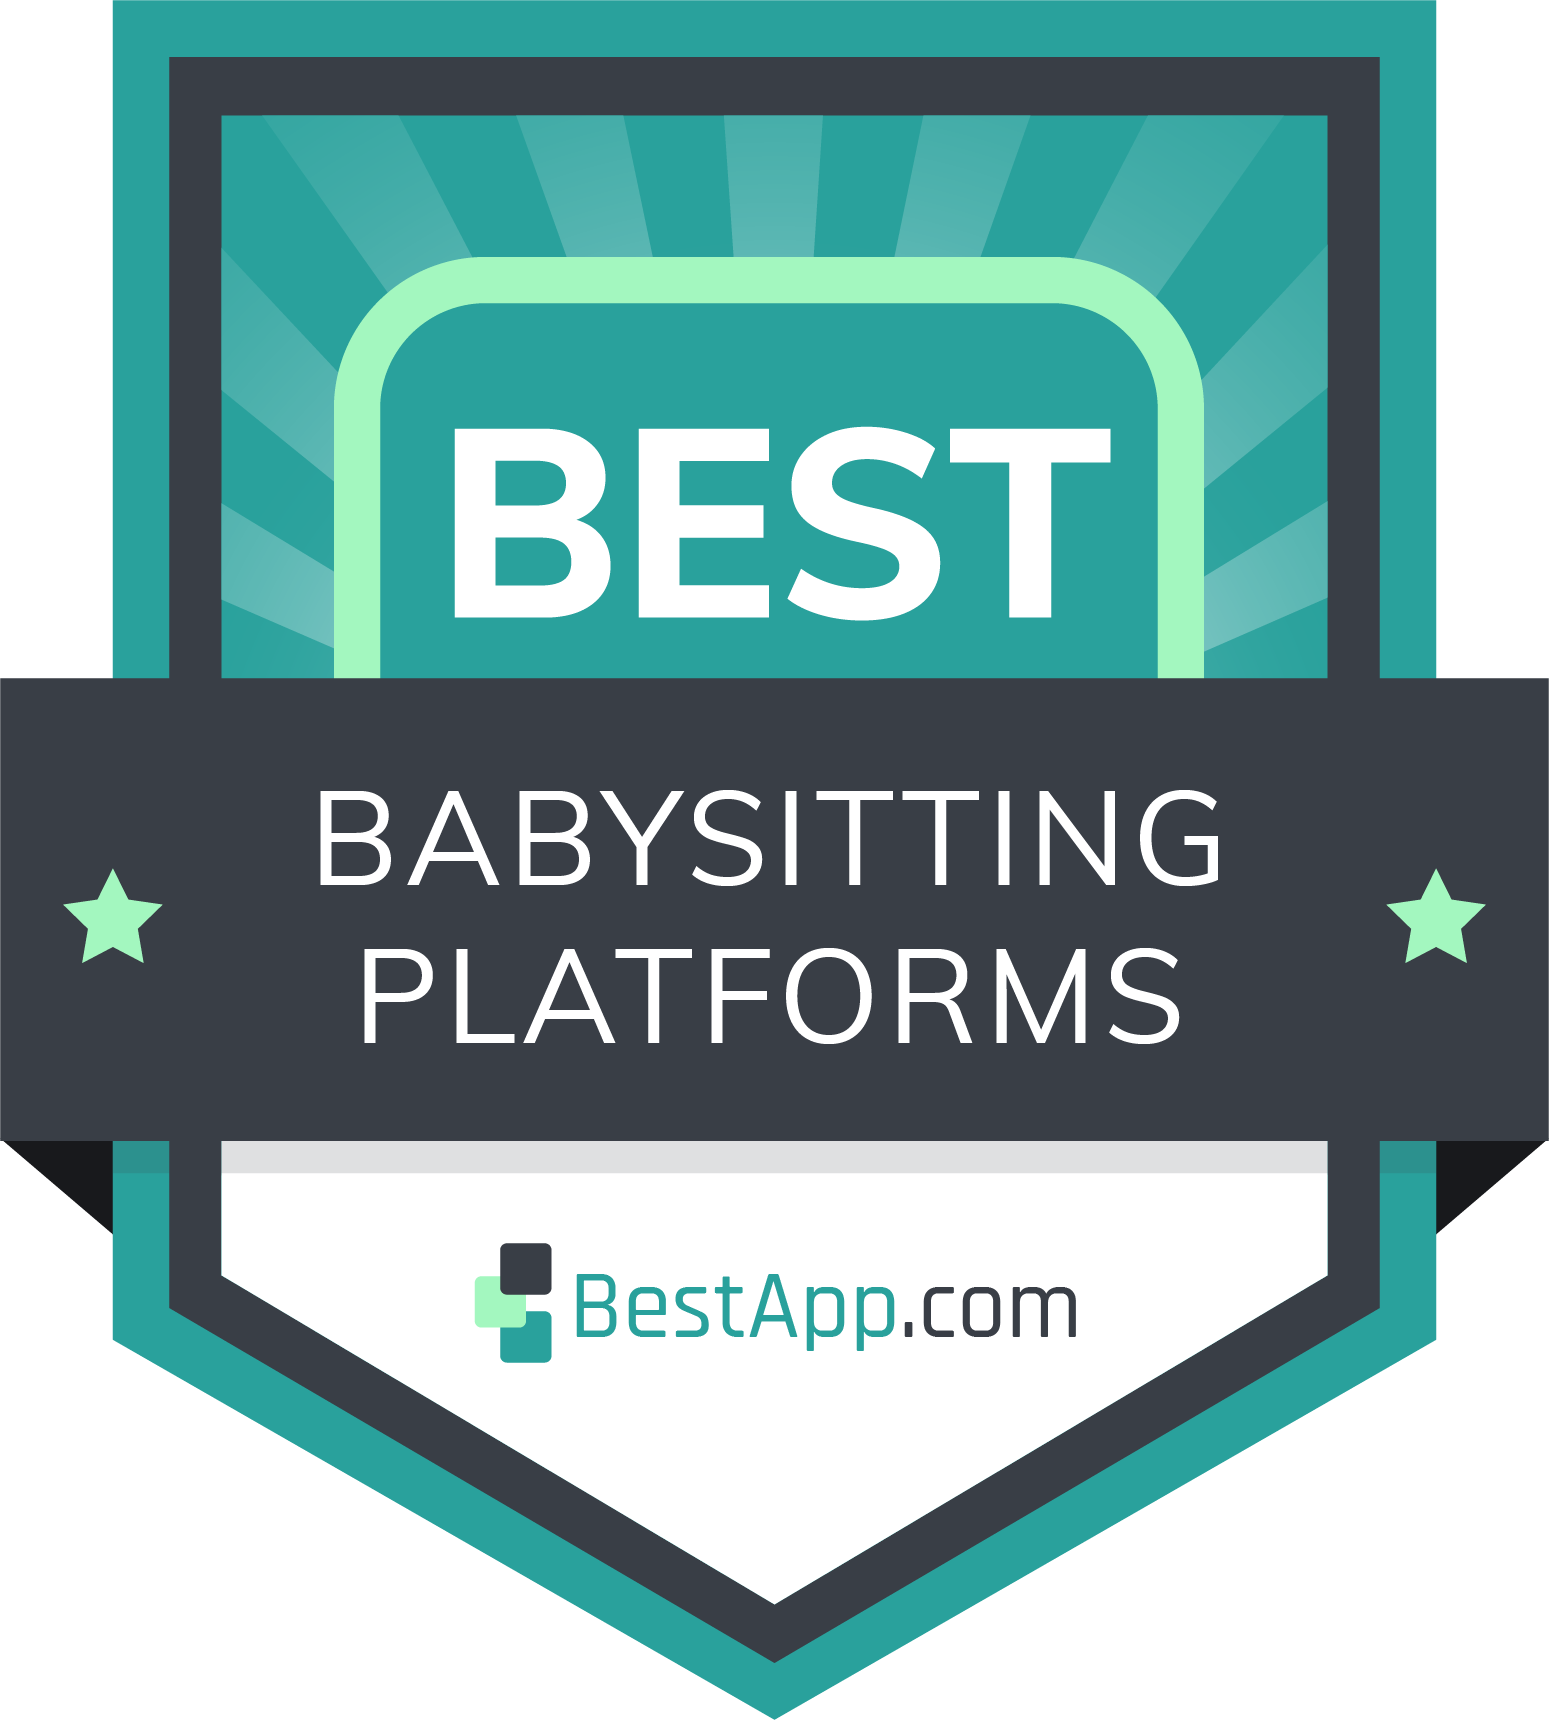 Best Babysitting Platforms Badge